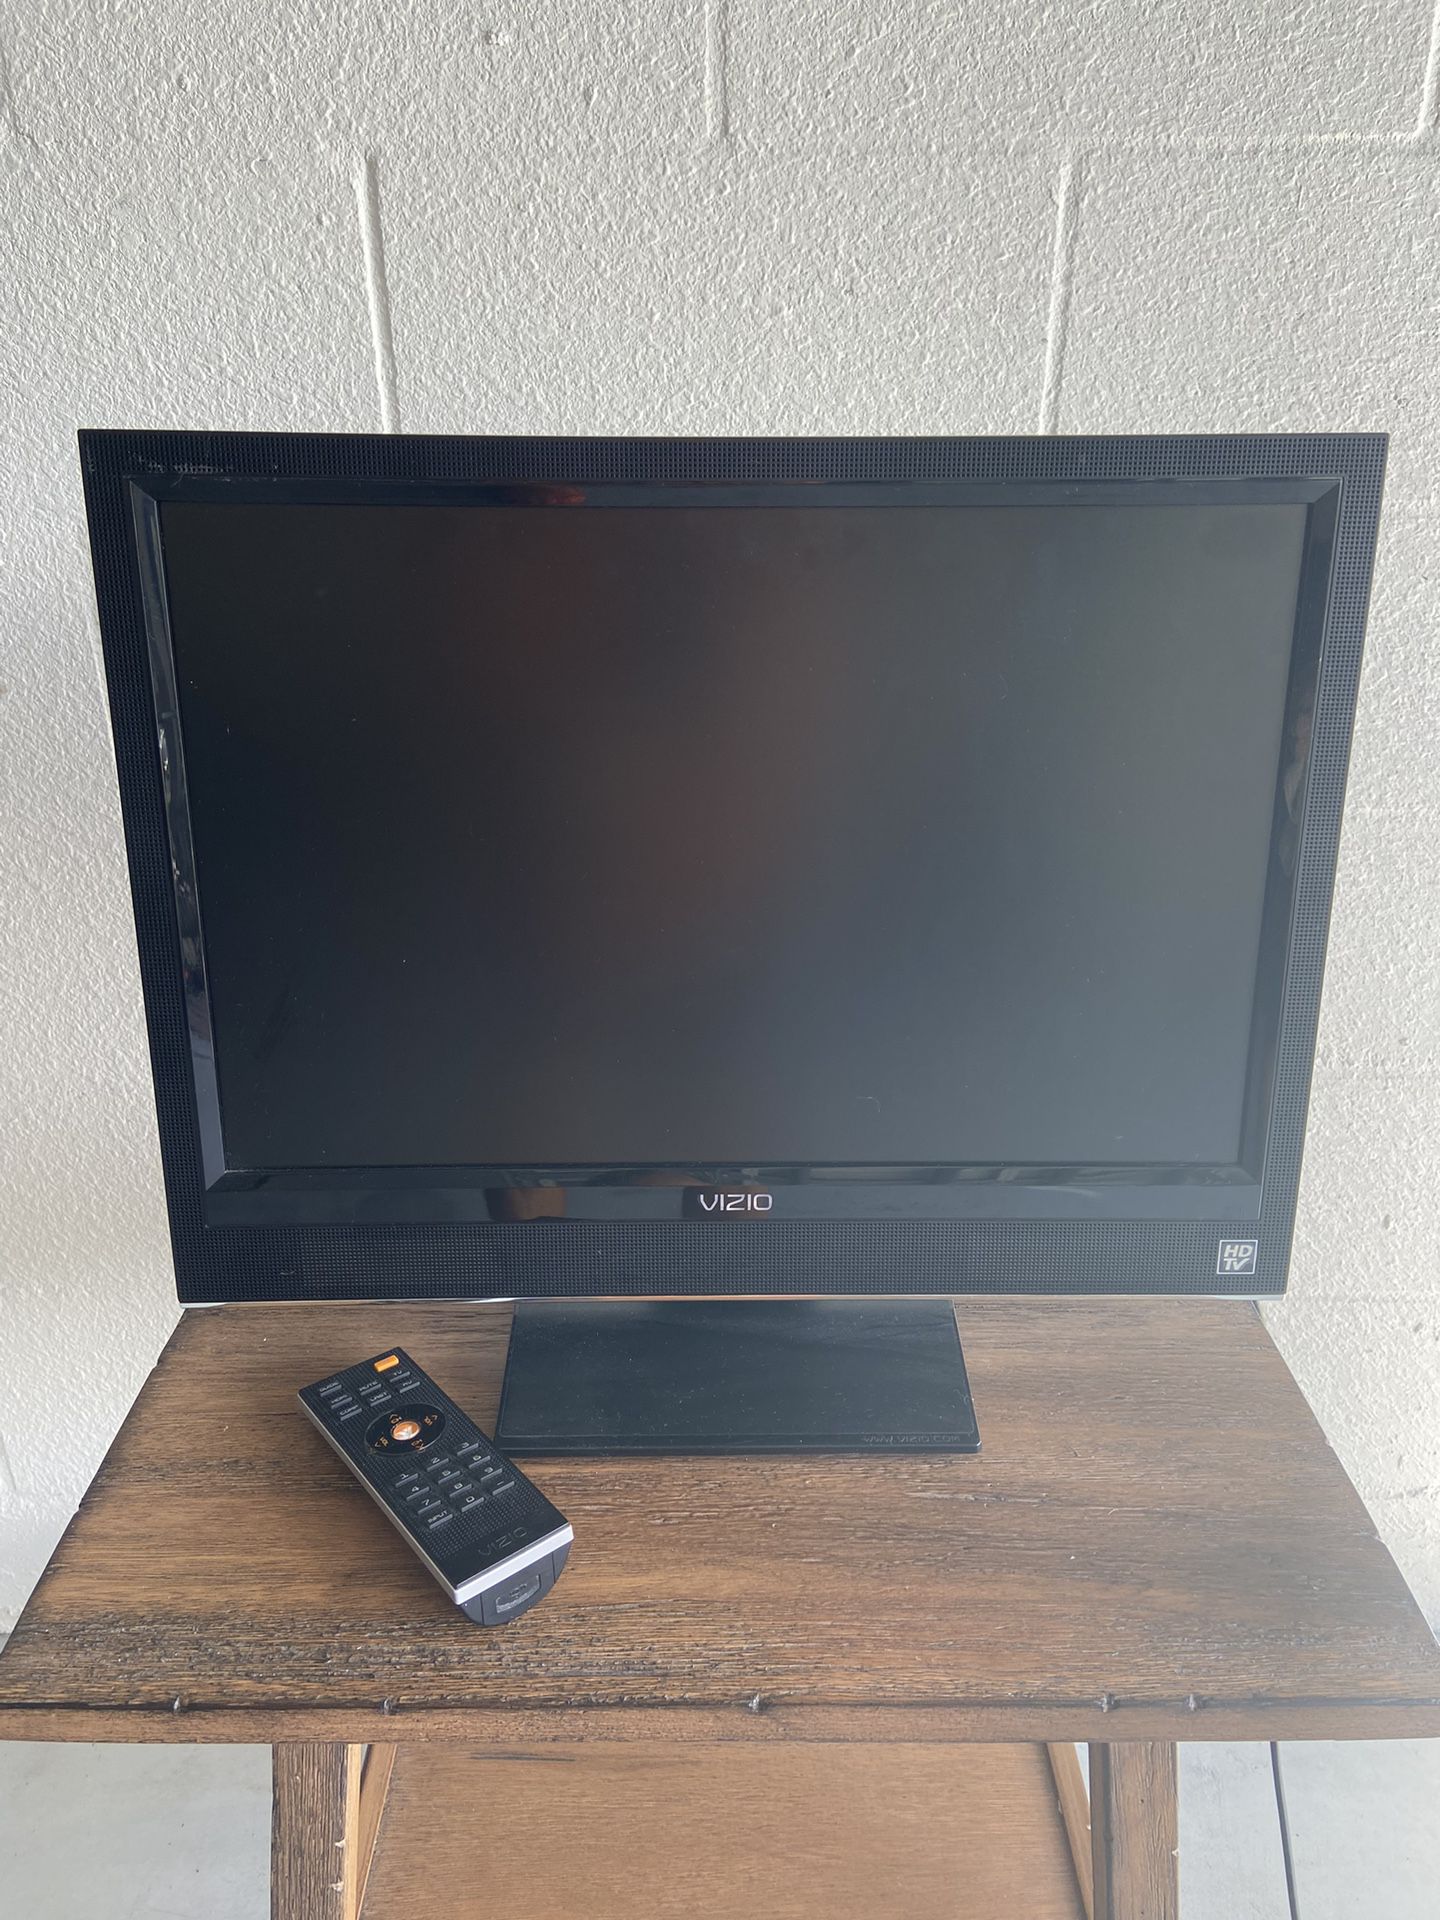 Vizio 22” HDTV 10A High Definition LCD Television